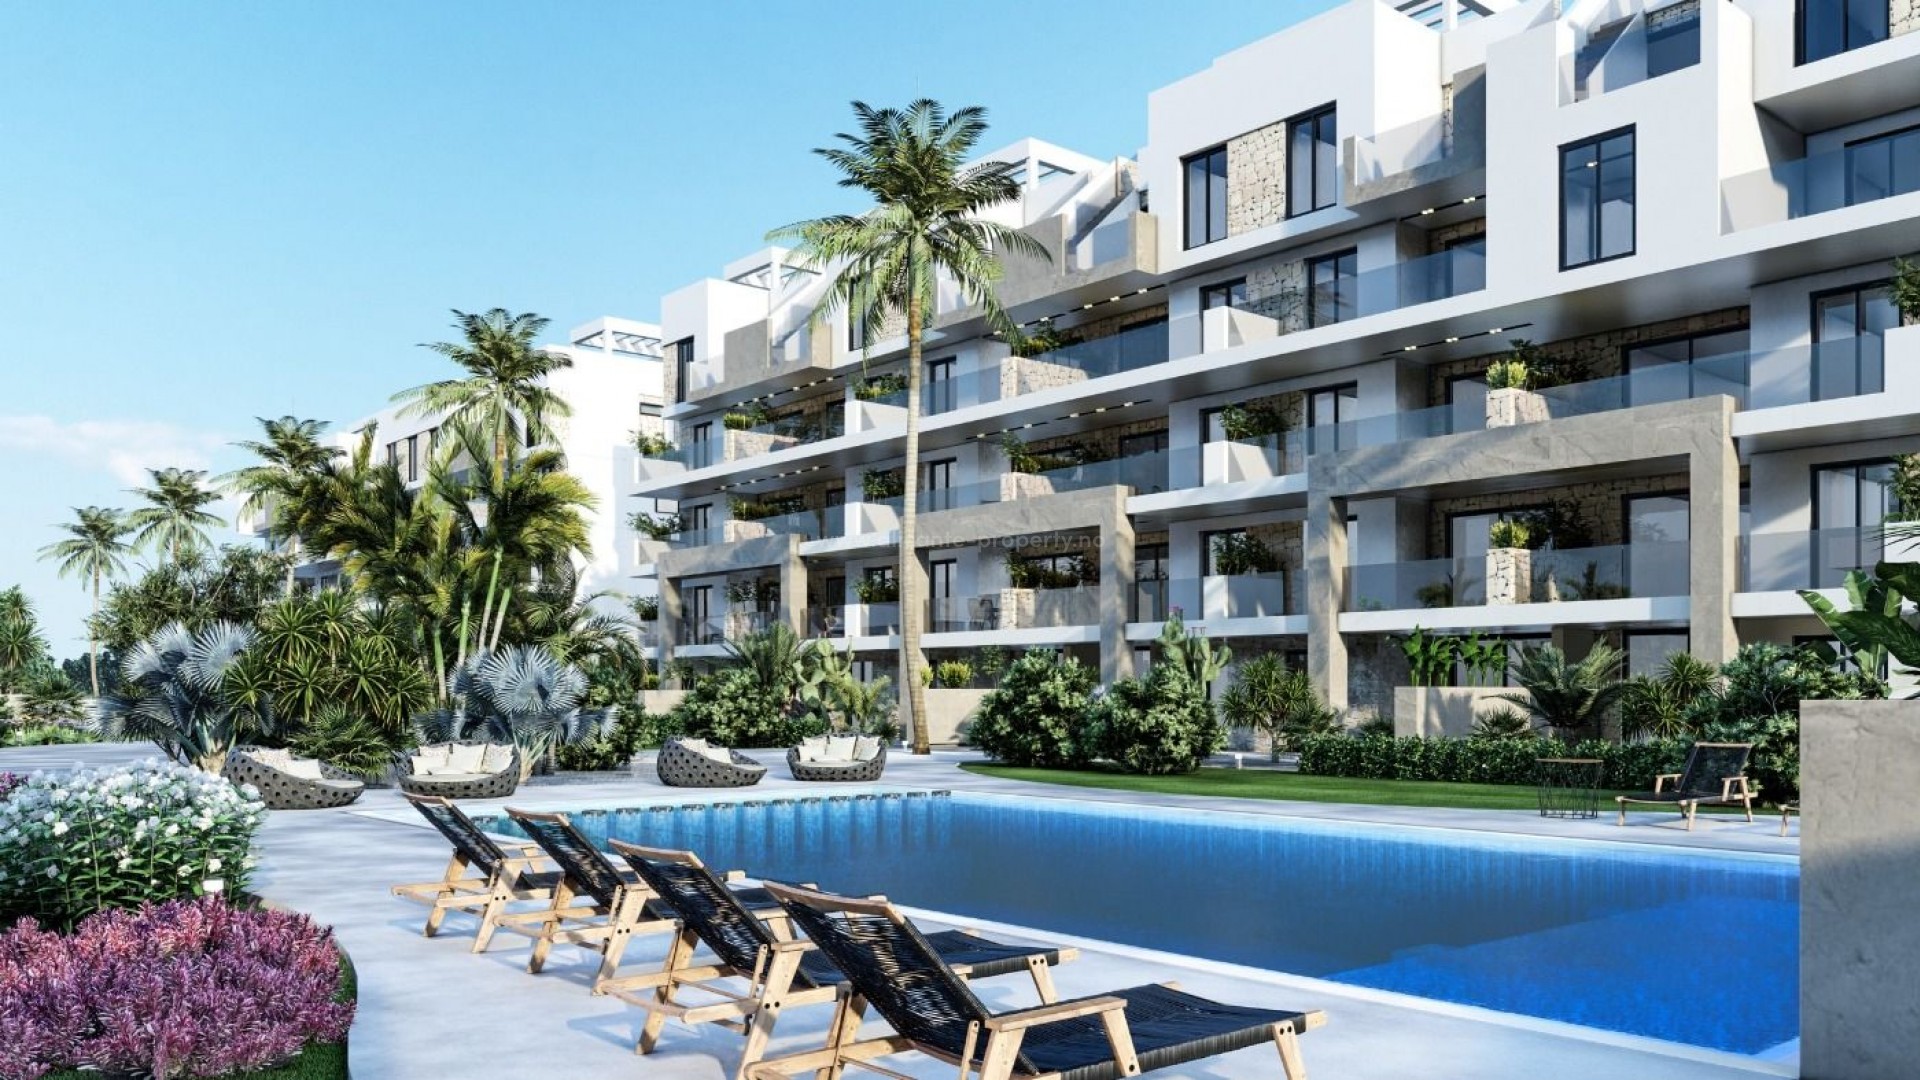 New apartment complex in I El Raso, Guardamar del Segura, 2/3 bedrooms, communal swimming pools, views of the salt lagoon, glass gym-spa area